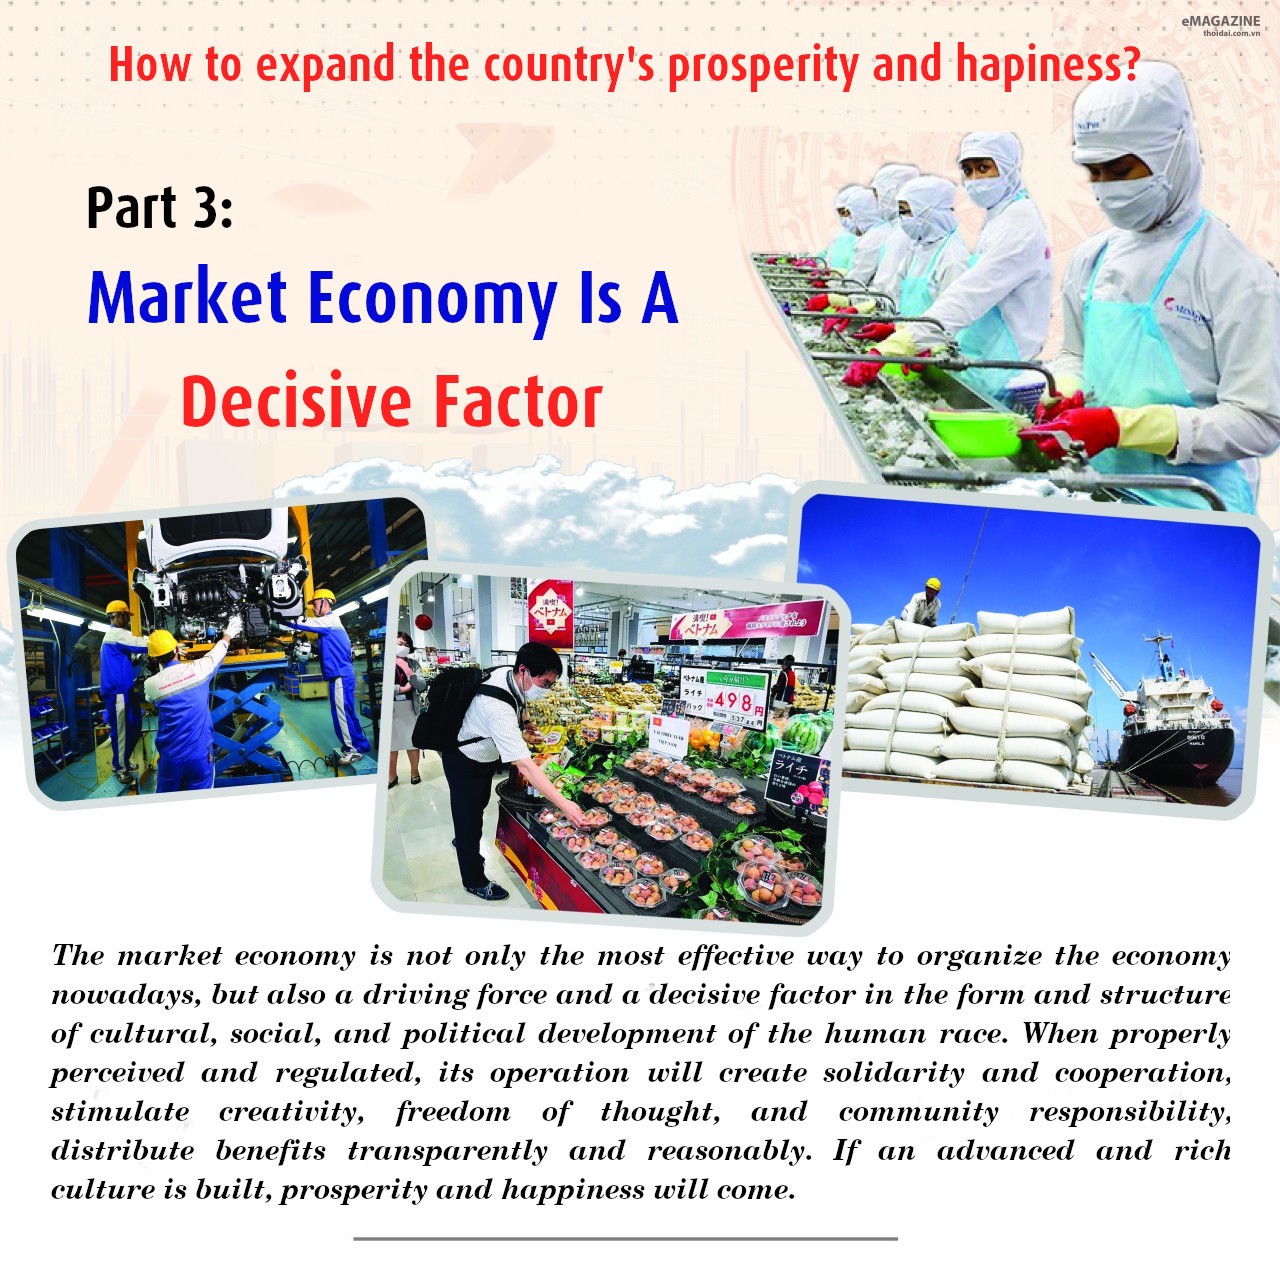 Market Economy Is A Decisive Factor